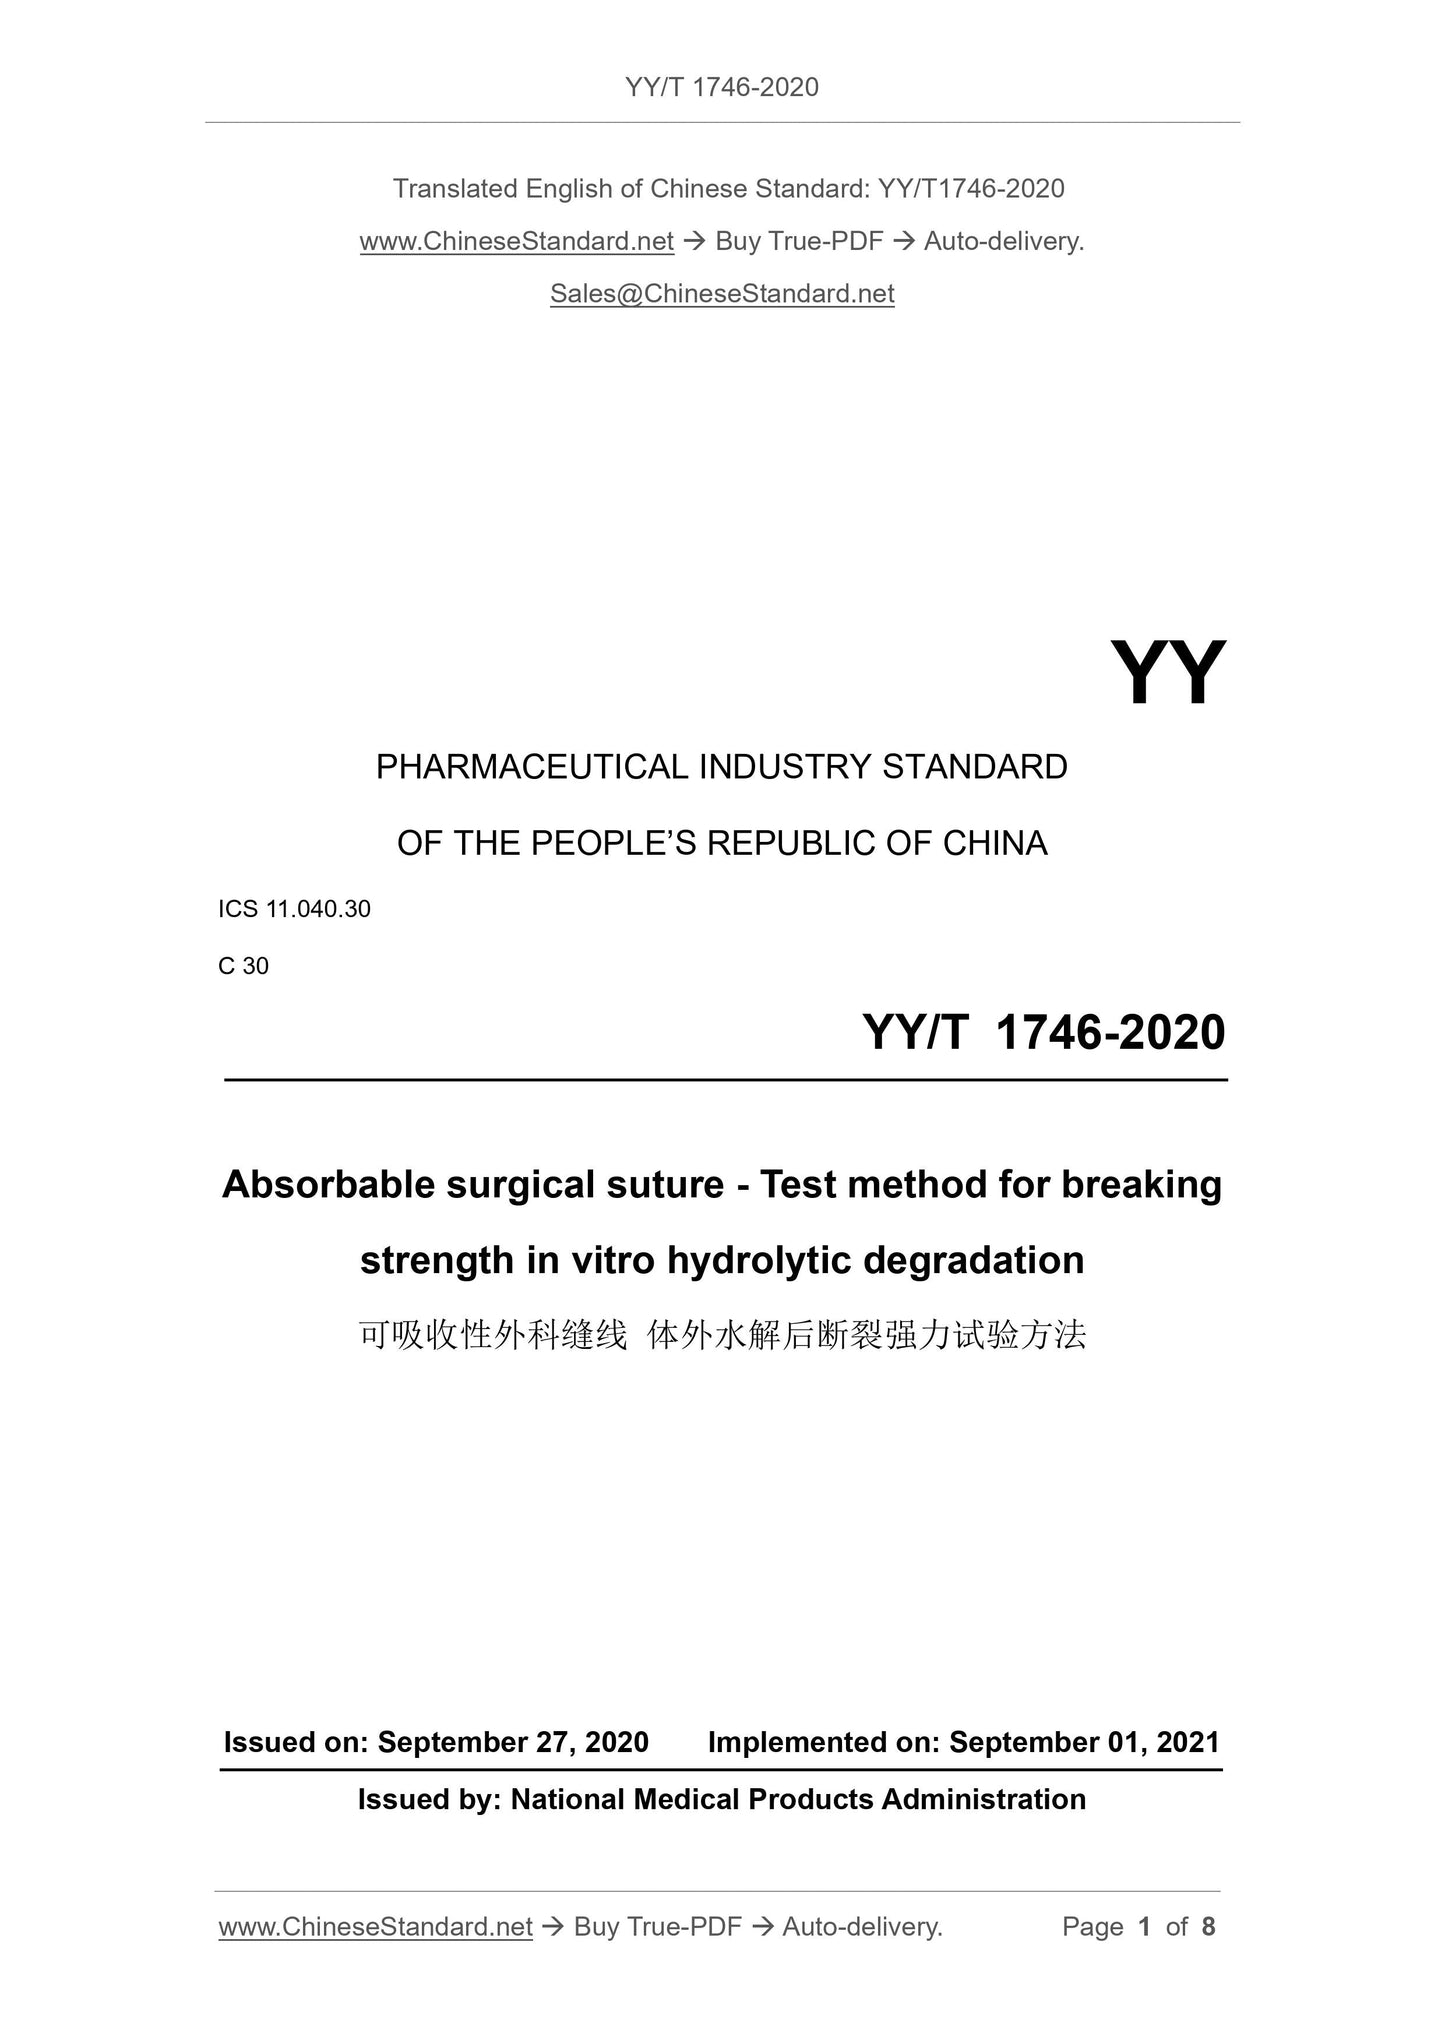 YY/T 1746-2020 Page 1